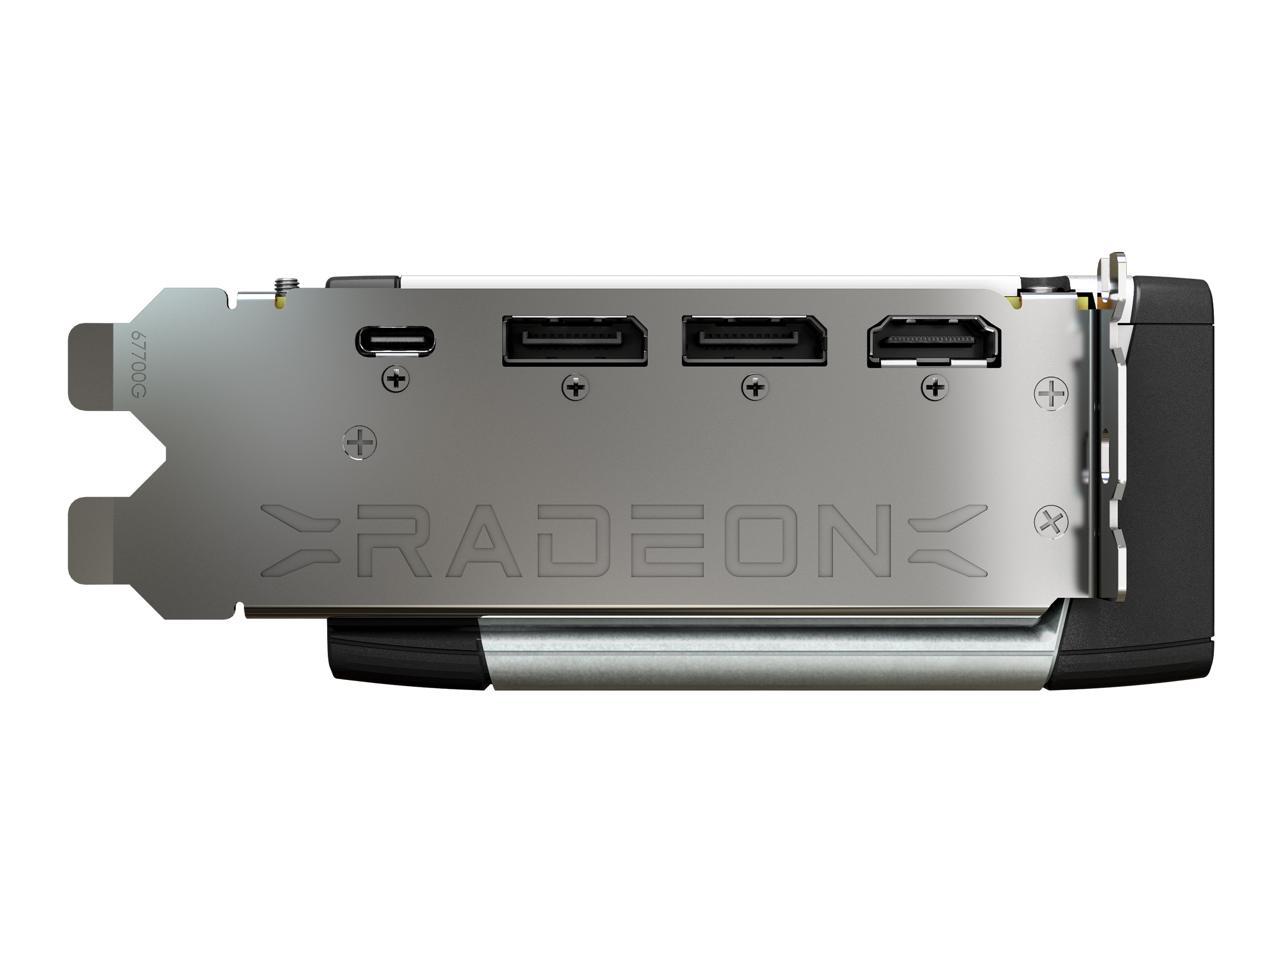 ASRock Radeon RX 6900 XT Gaming Graphic Card 16GB GDDR6 VRAM AMD RDNA2